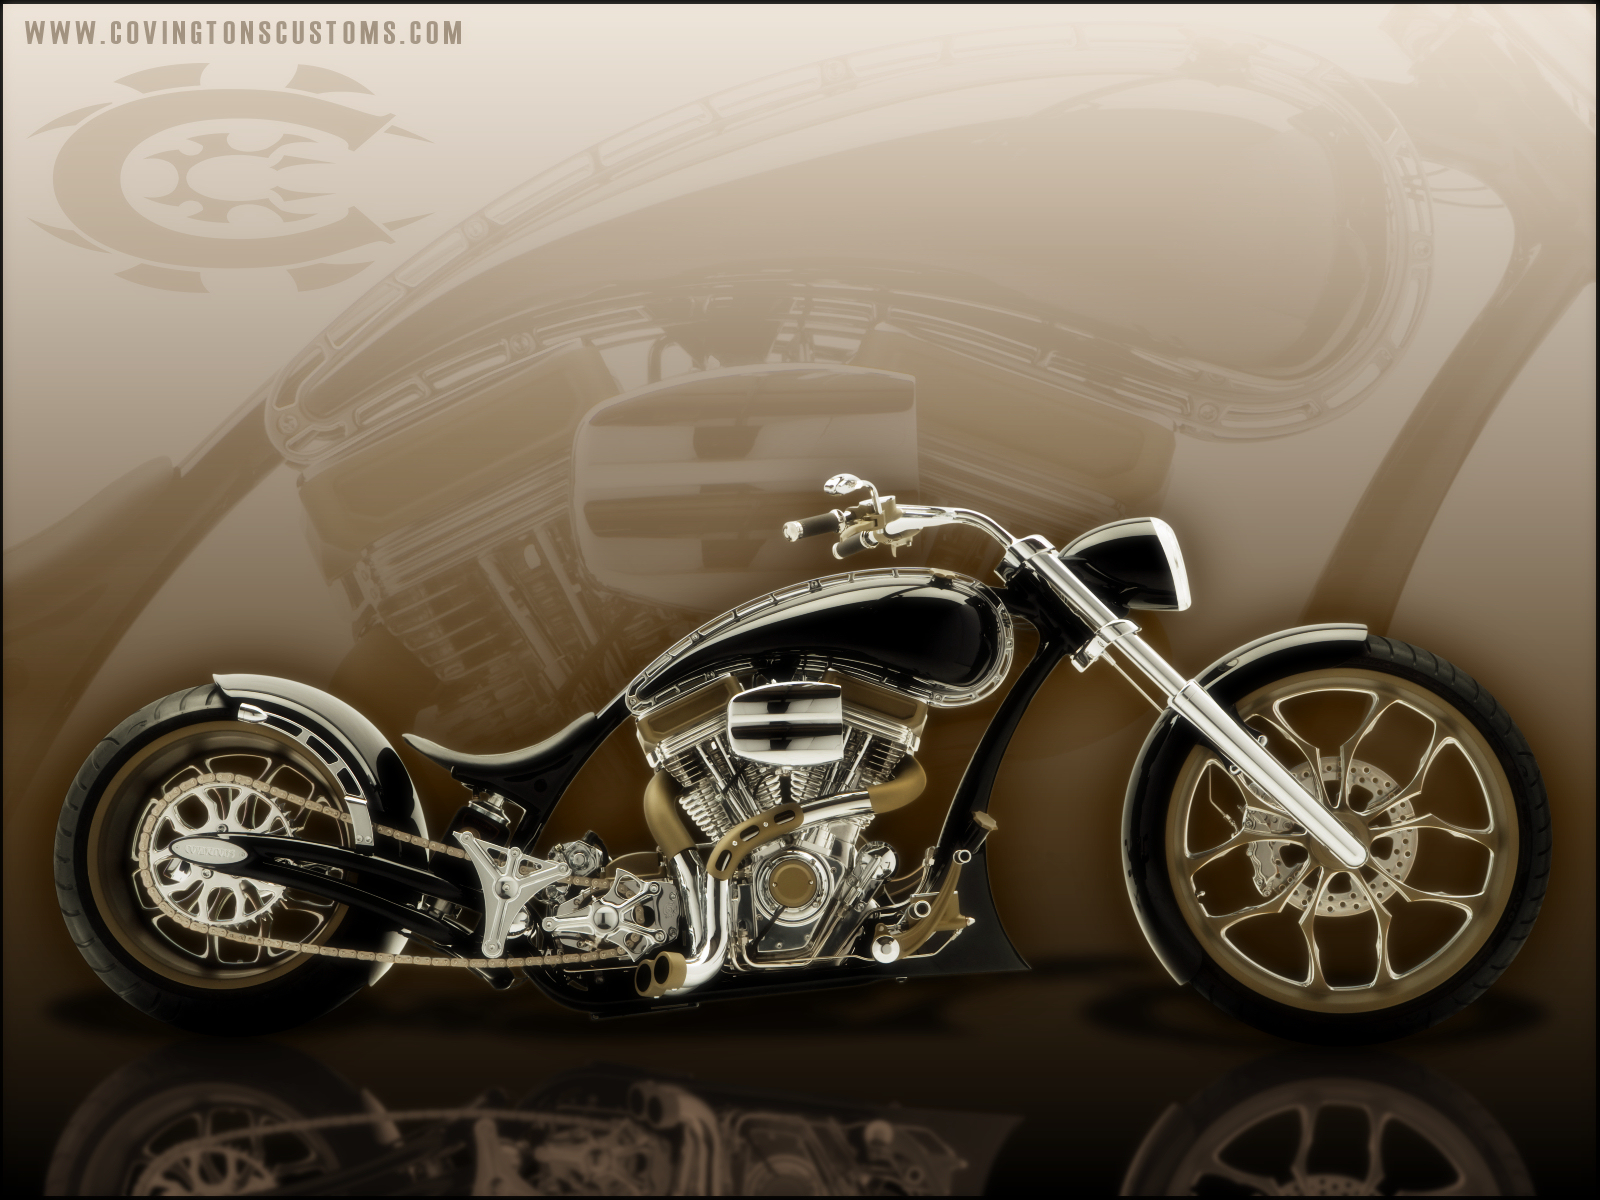 Covingtons Custom Motorcycle WallPaper 42jpg